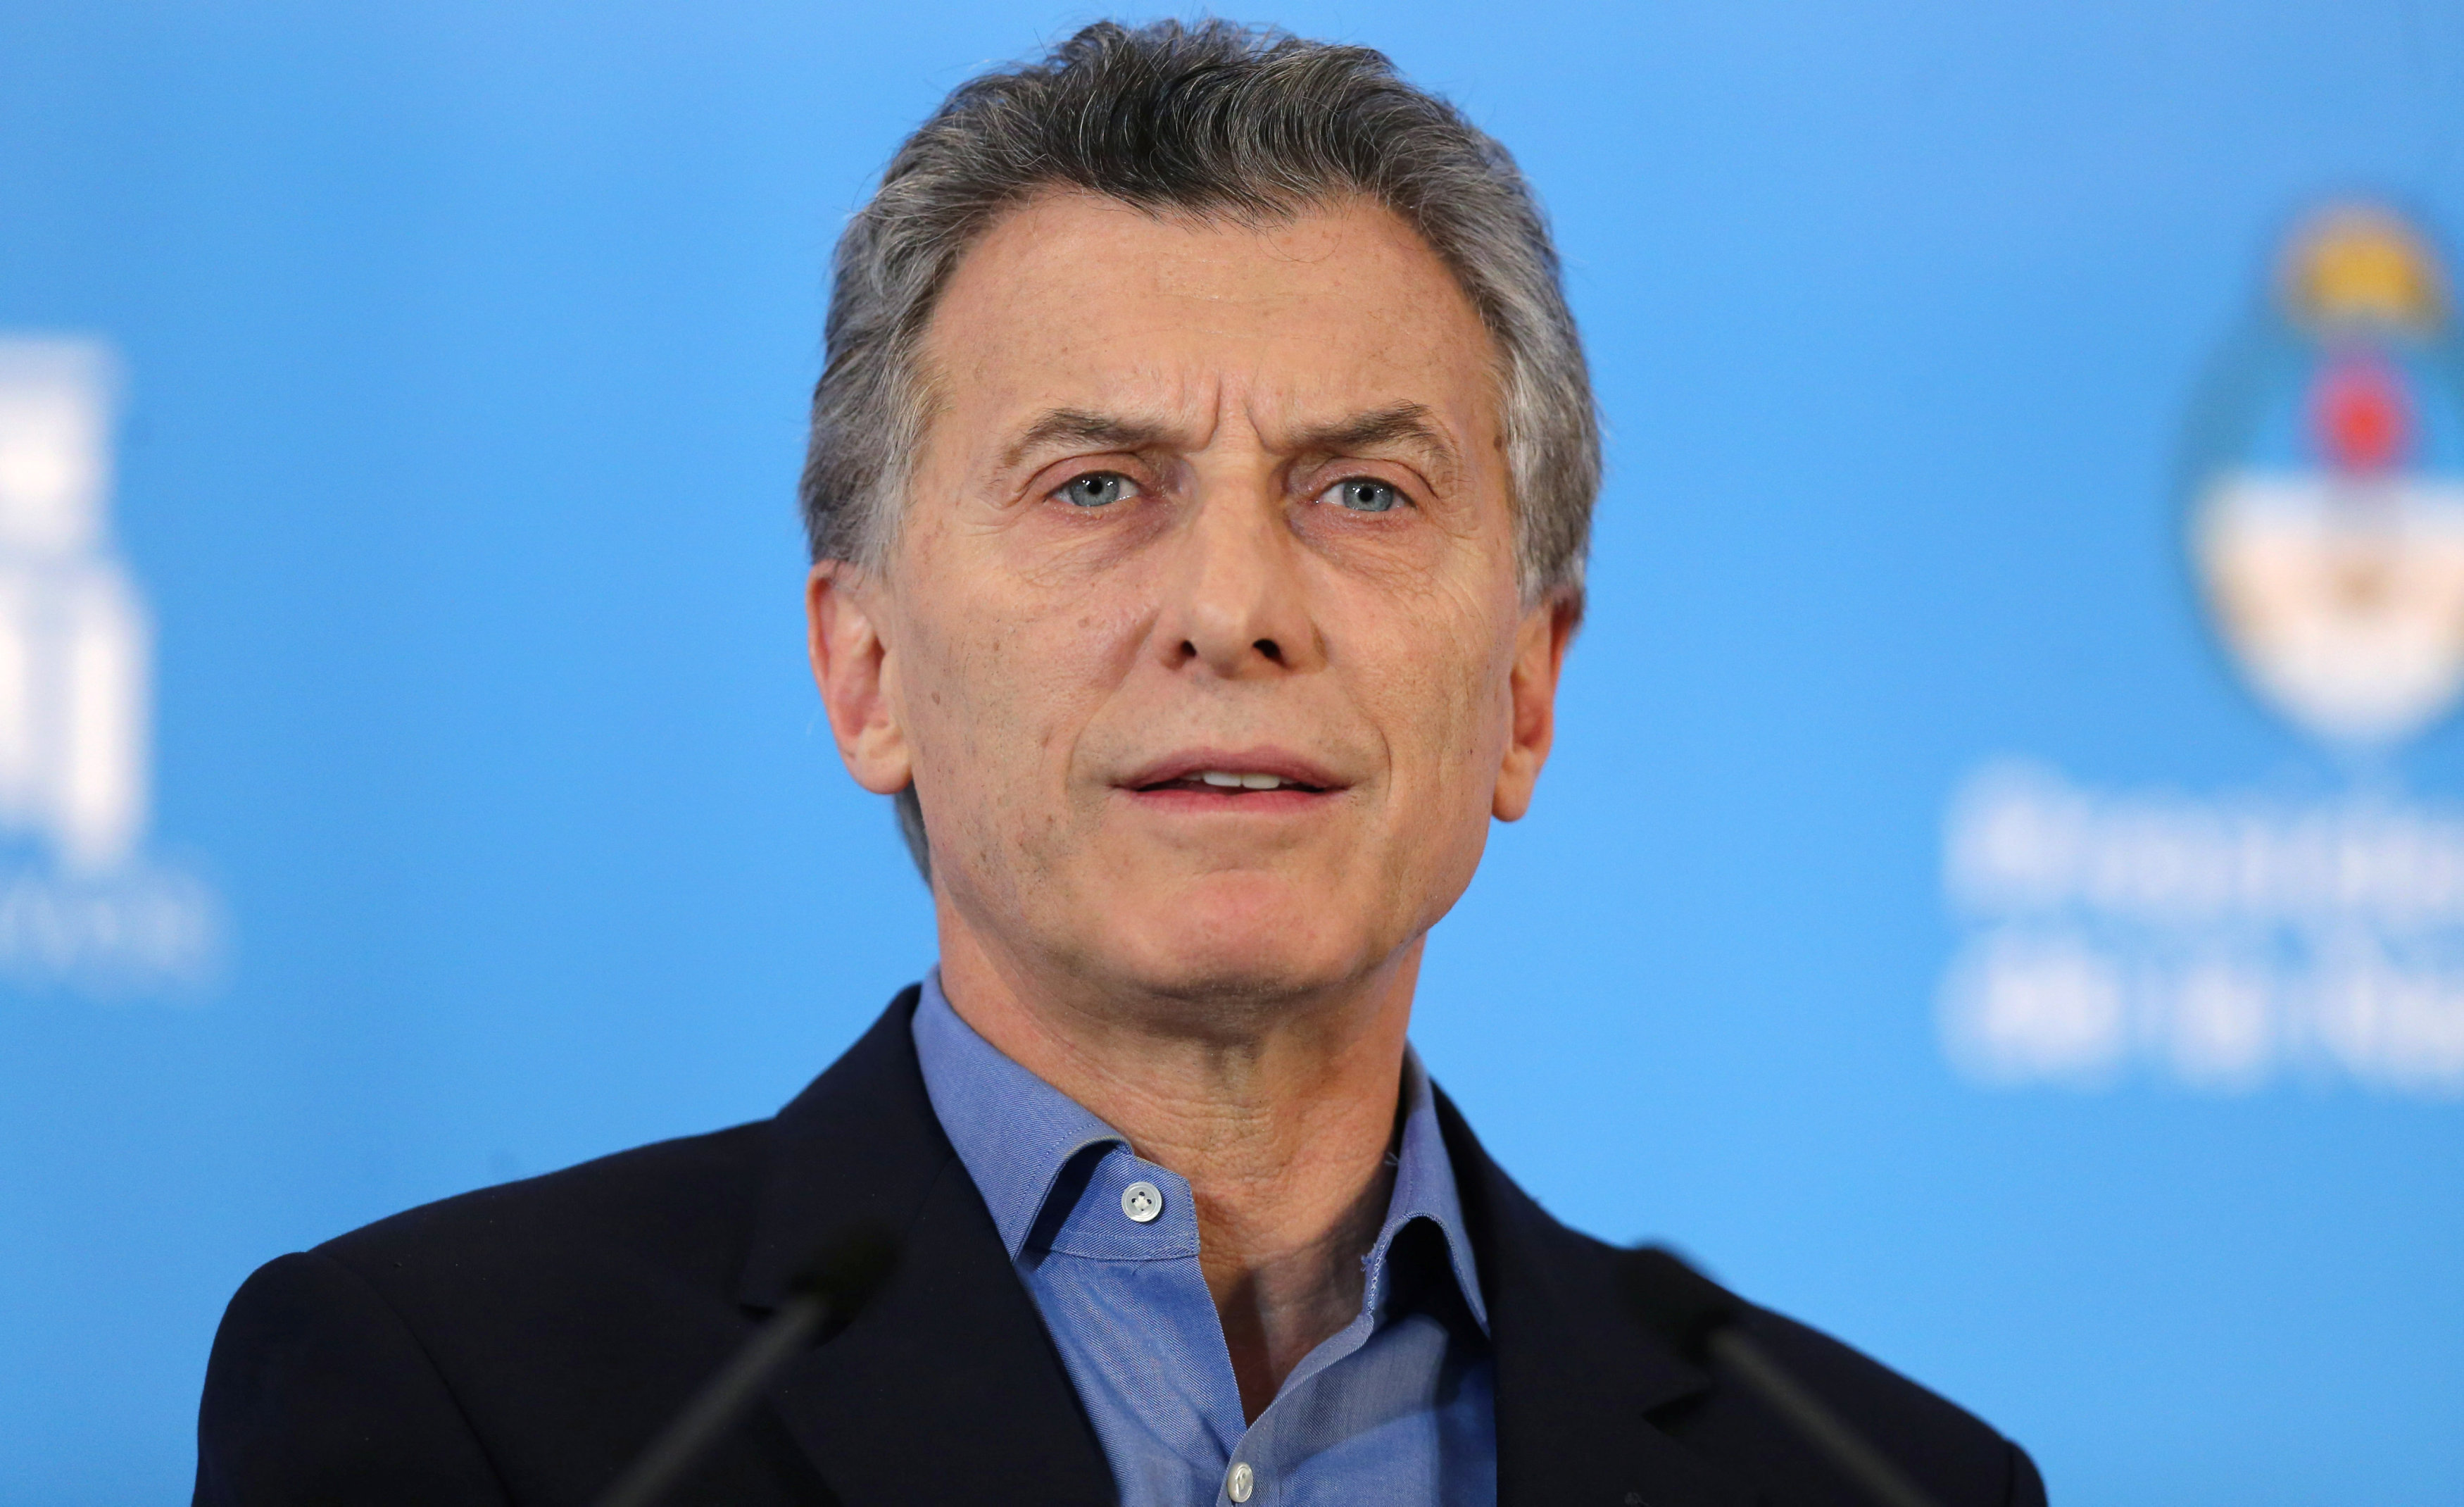 Fiscal argentino pide investigar a Macri por firma decreto sobre blanqueo de capitales